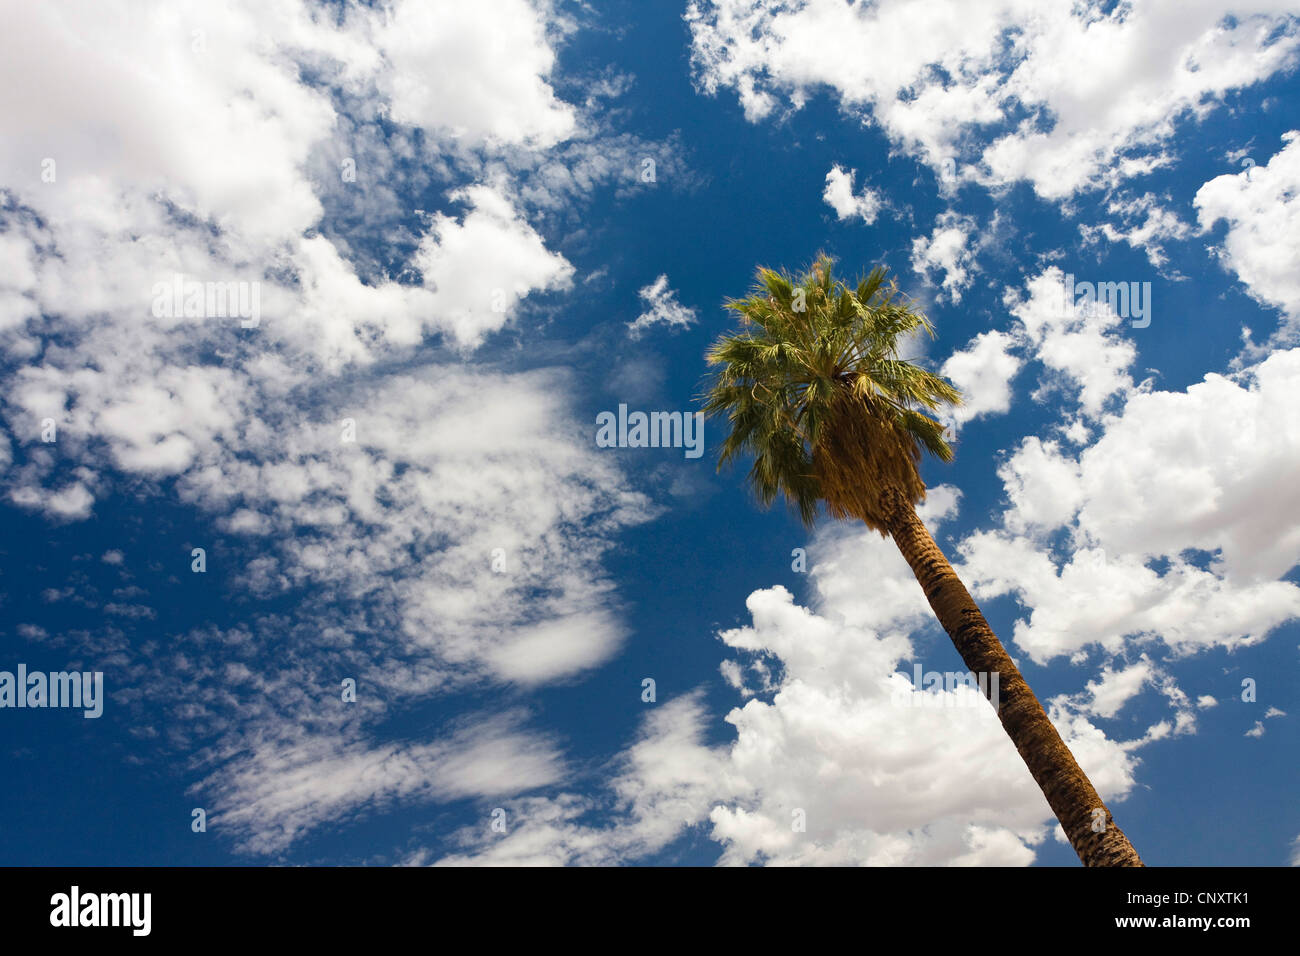 California fan palm, Petticoat Palm (Washingtonia filifera), palm against cloudy sky, USA, California, Mojave, Joshua Tree National Park Stock Photo